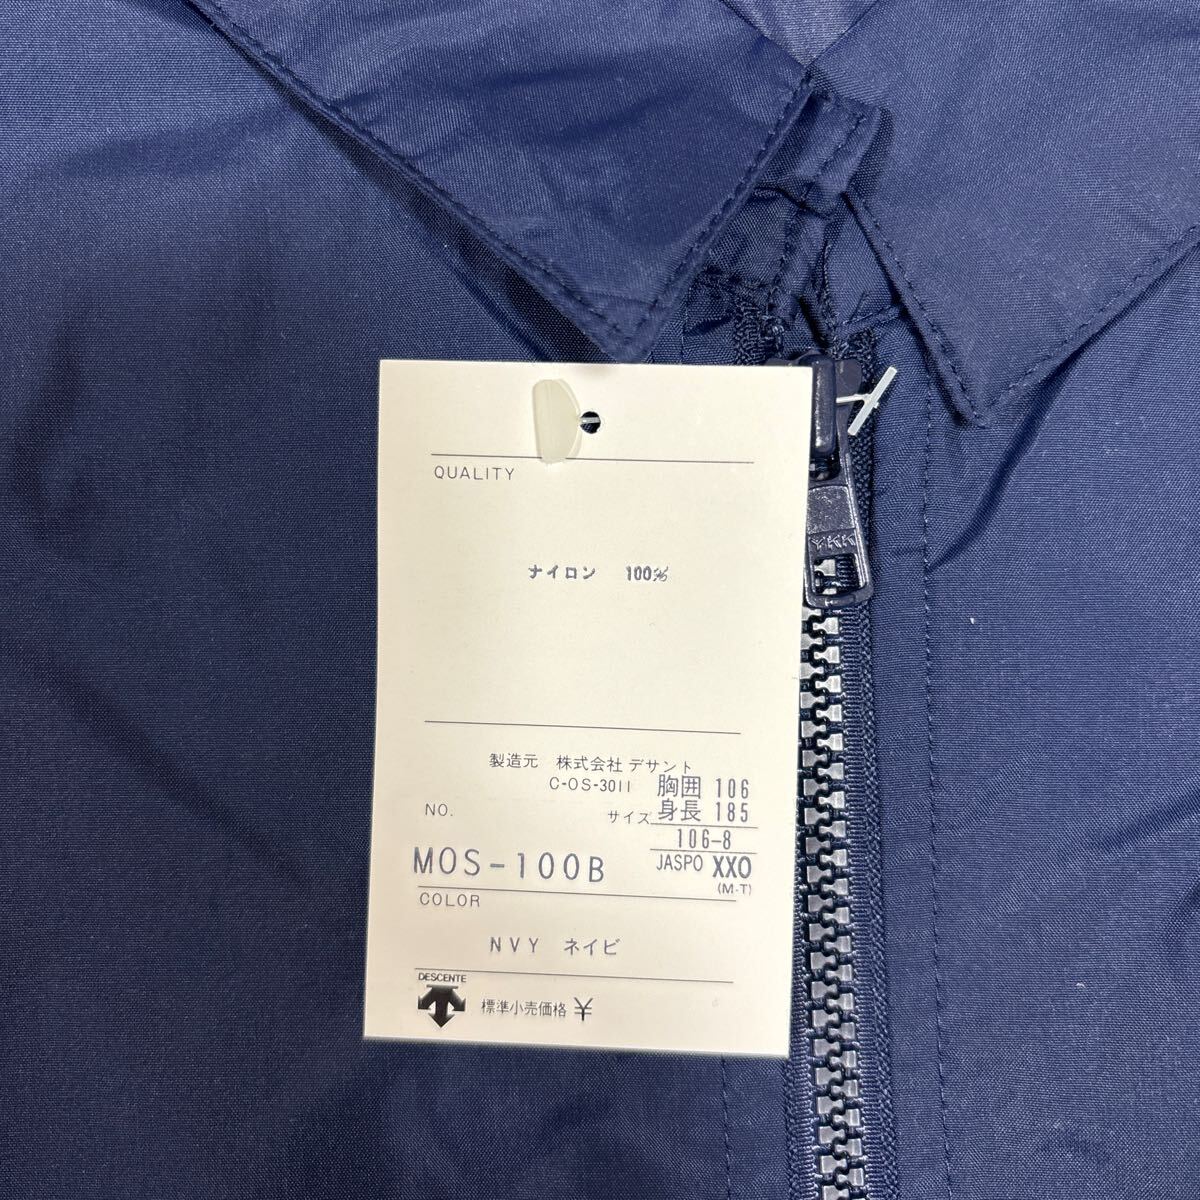 [ new goods * tag attaching ] Descente (DESCENTE) rain jacket XXO size navy blue color ( navy ) nylon made Wind breaker 